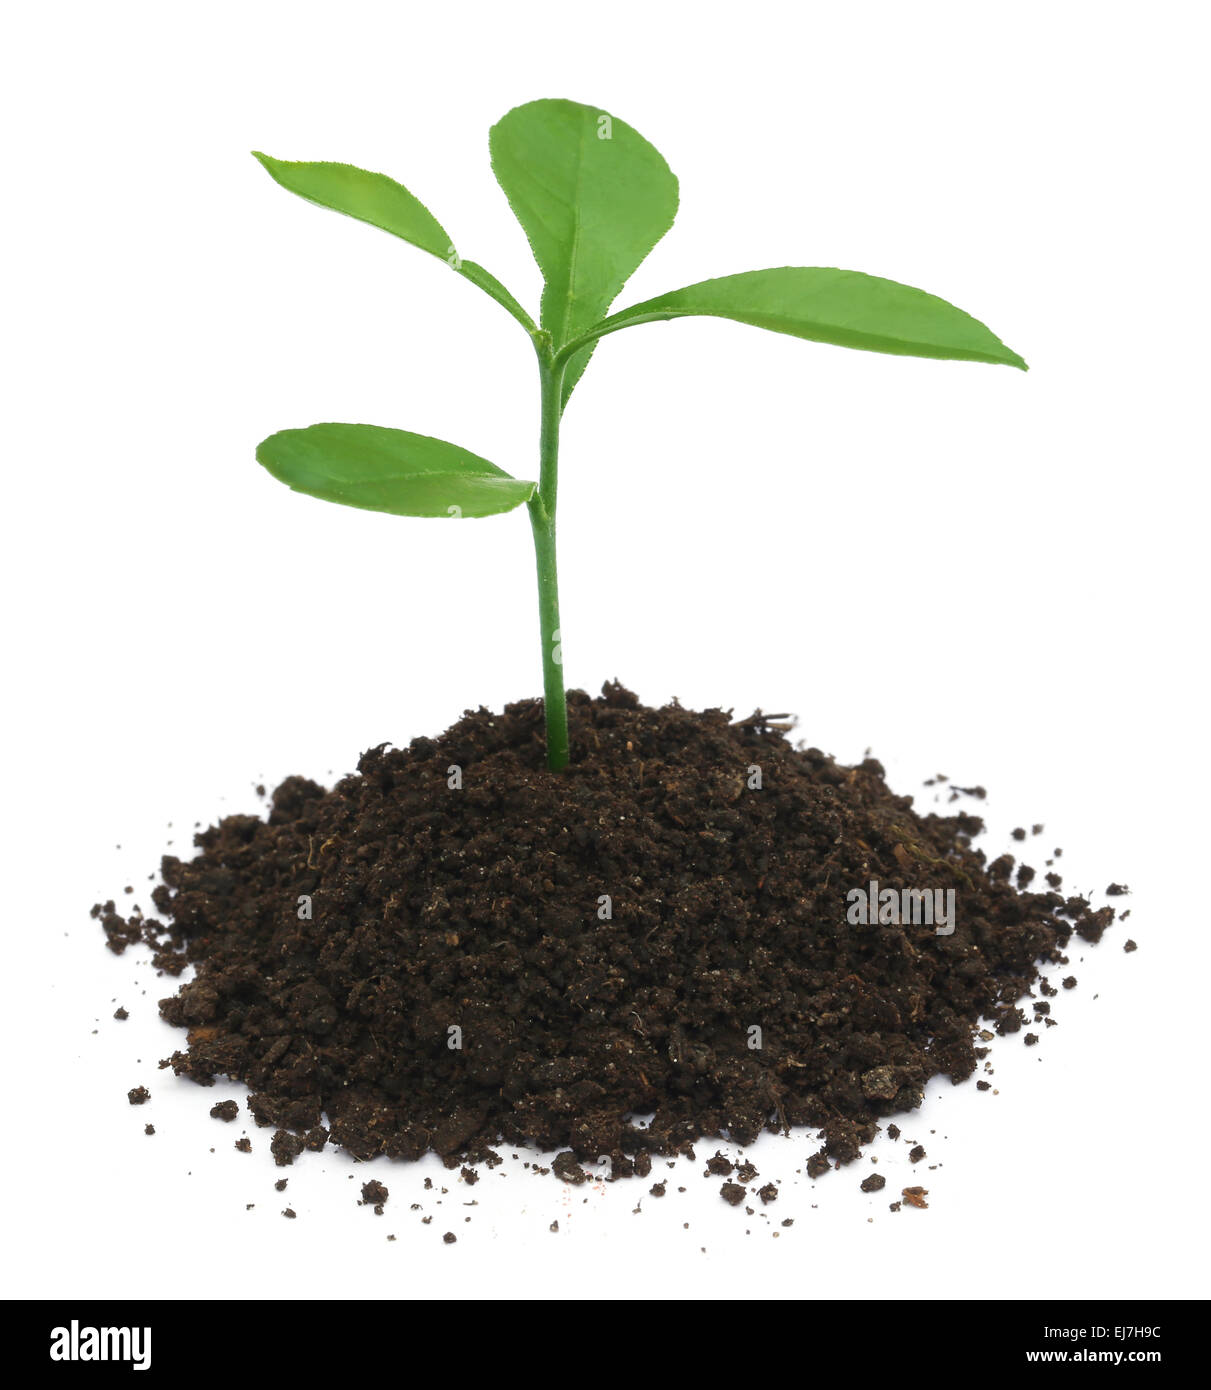 Plant in fertile soil over white background Stock Photo